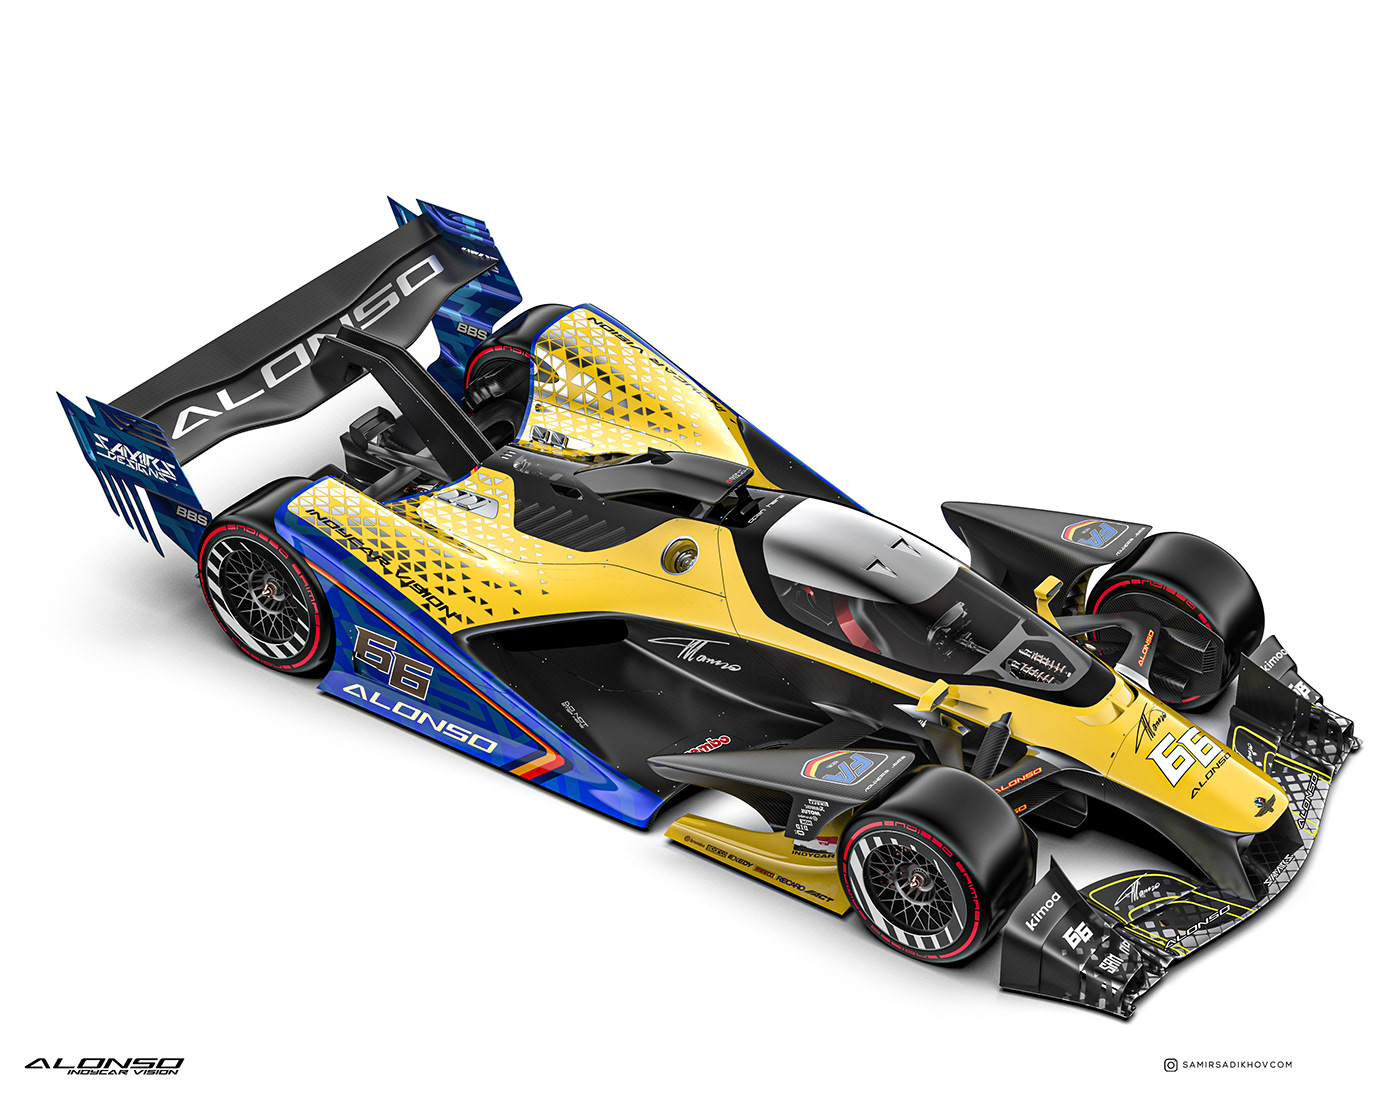 Alonso car design Fernando alonso indy indycar motorsports race car Racing samir sadikhov samirs